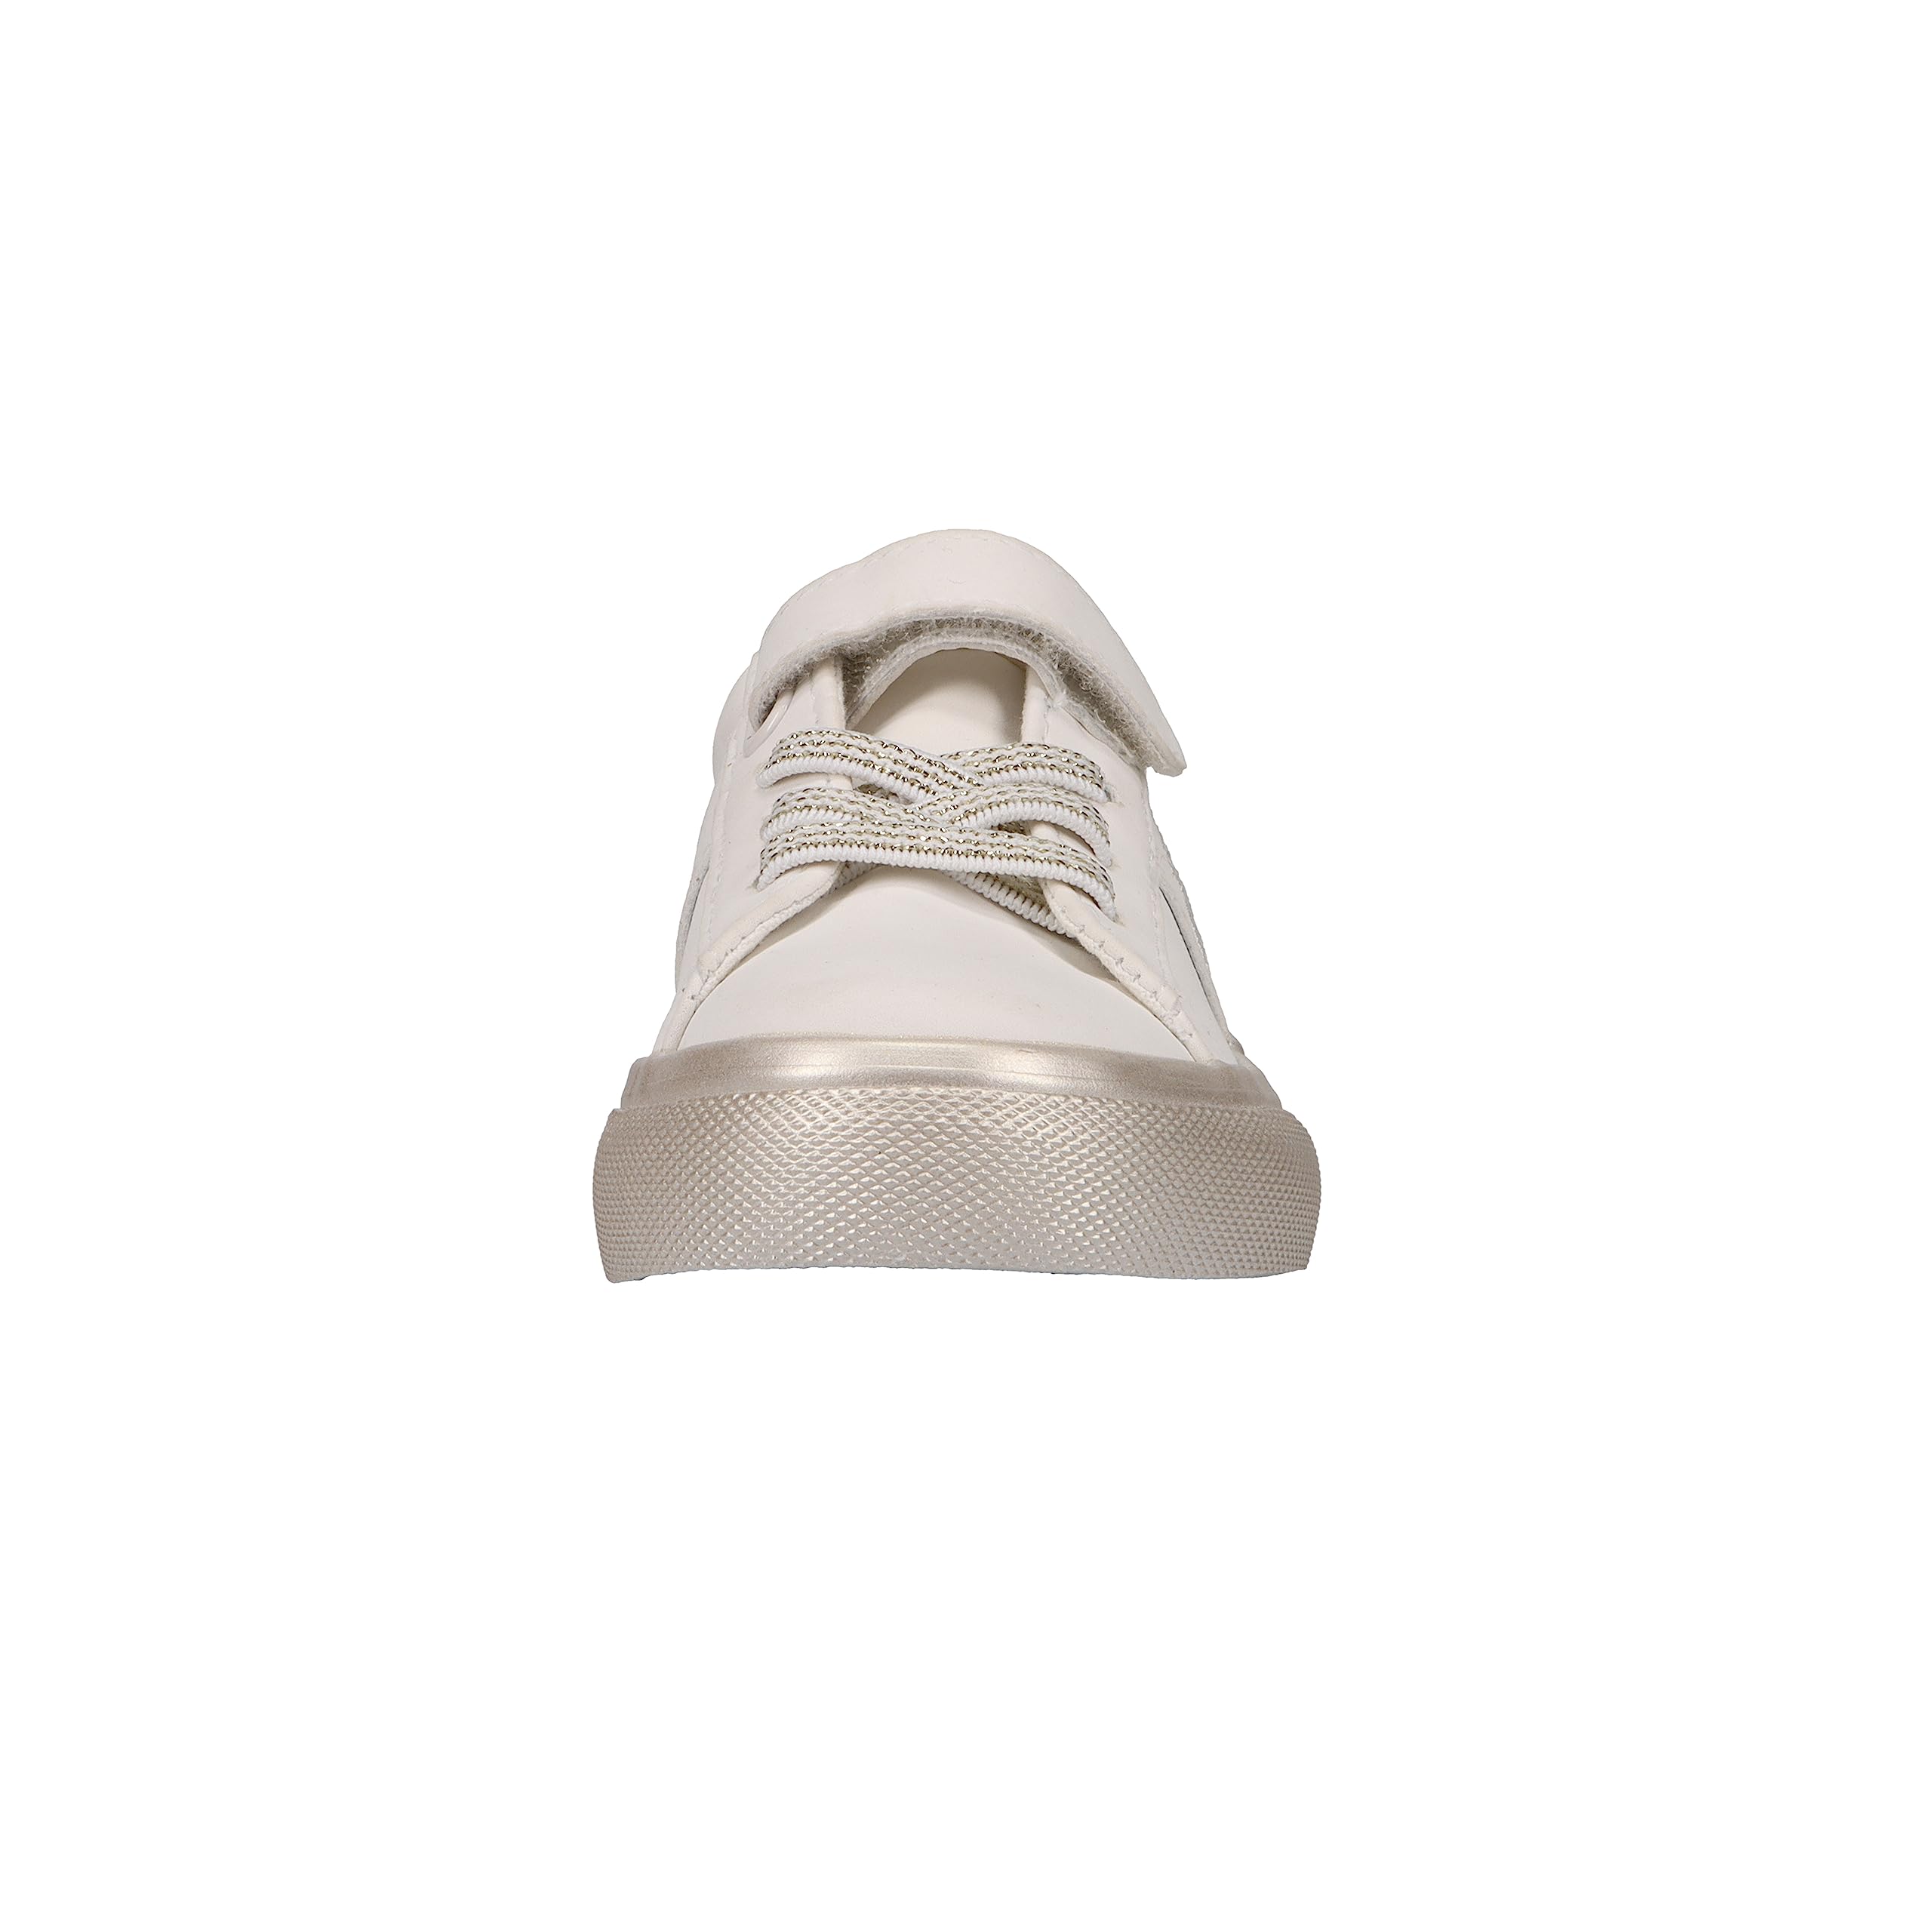 Polo Ralph Lauren Unisex-Child Sayer Ps (Toddler) Sneaker